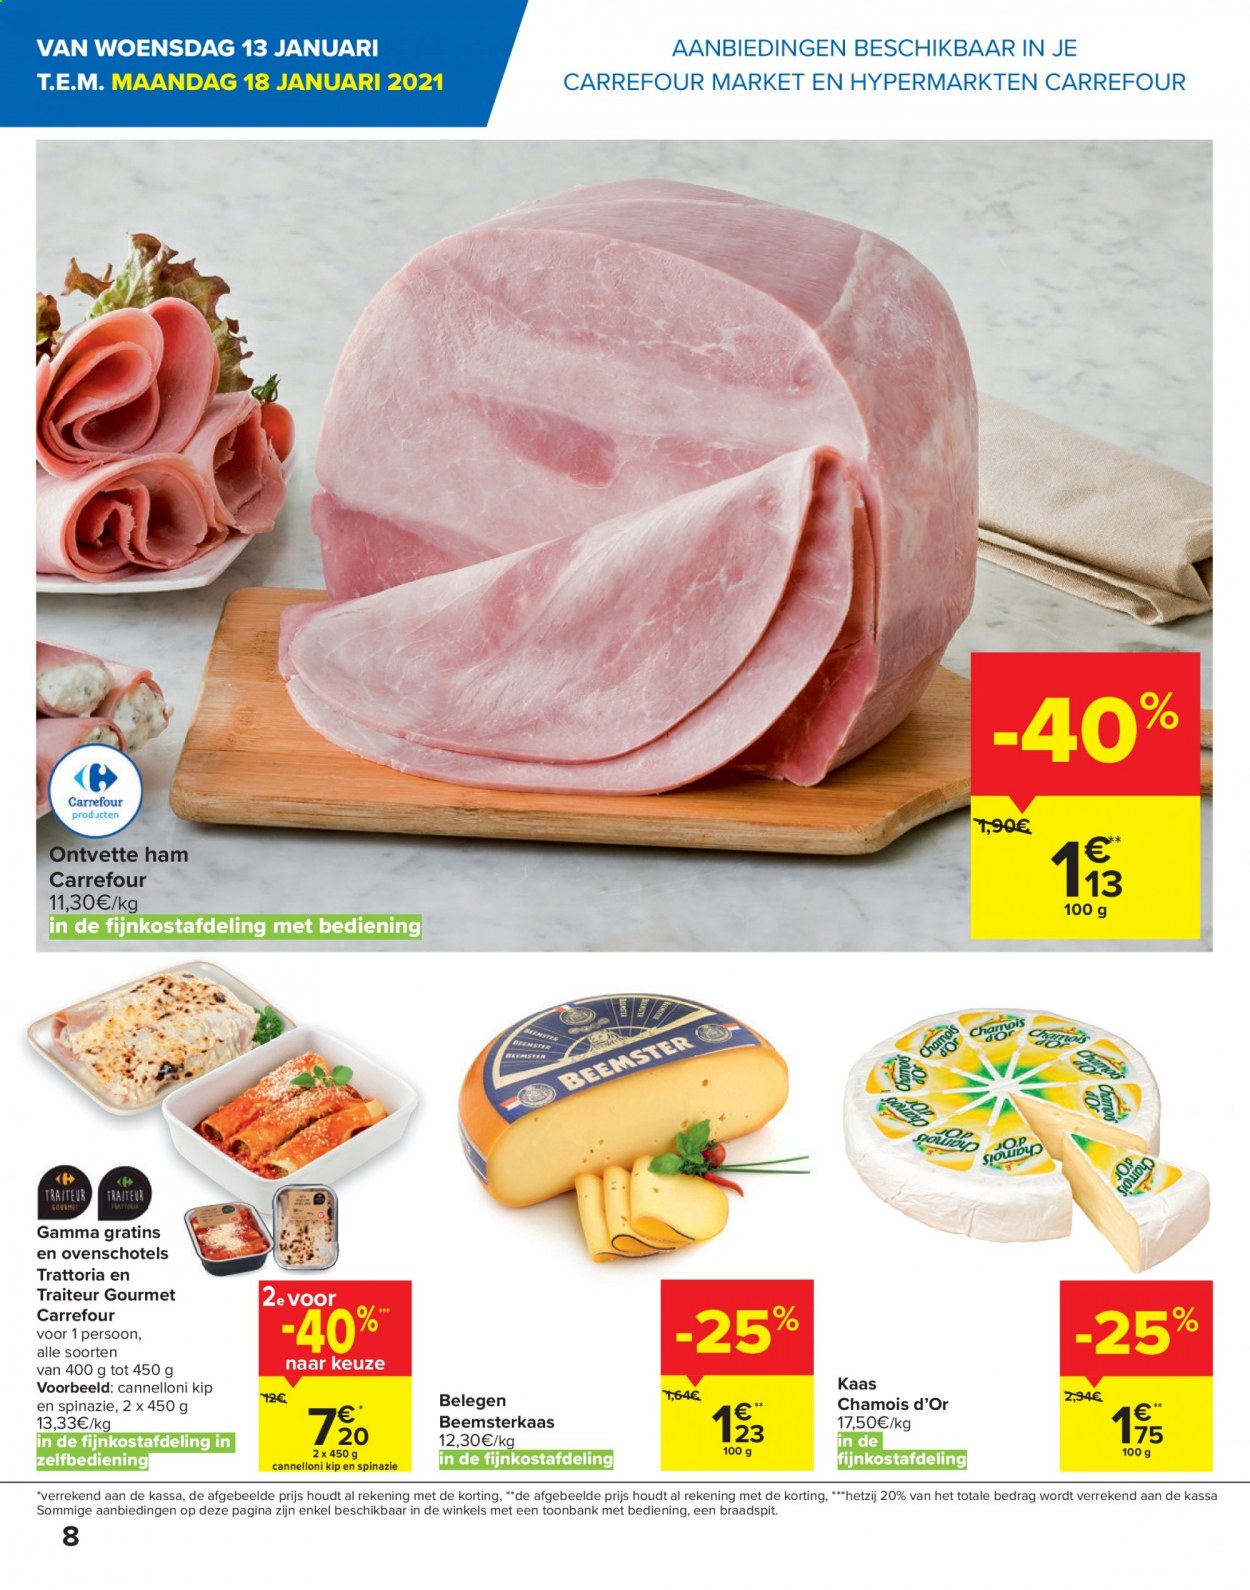 thumbnail - Carrefour-aanbieding - 13/01/2021 - 25/01/2021 -  producten in de aanbieding - ham, kaas, spinazie, Gamma. Pagina 8.